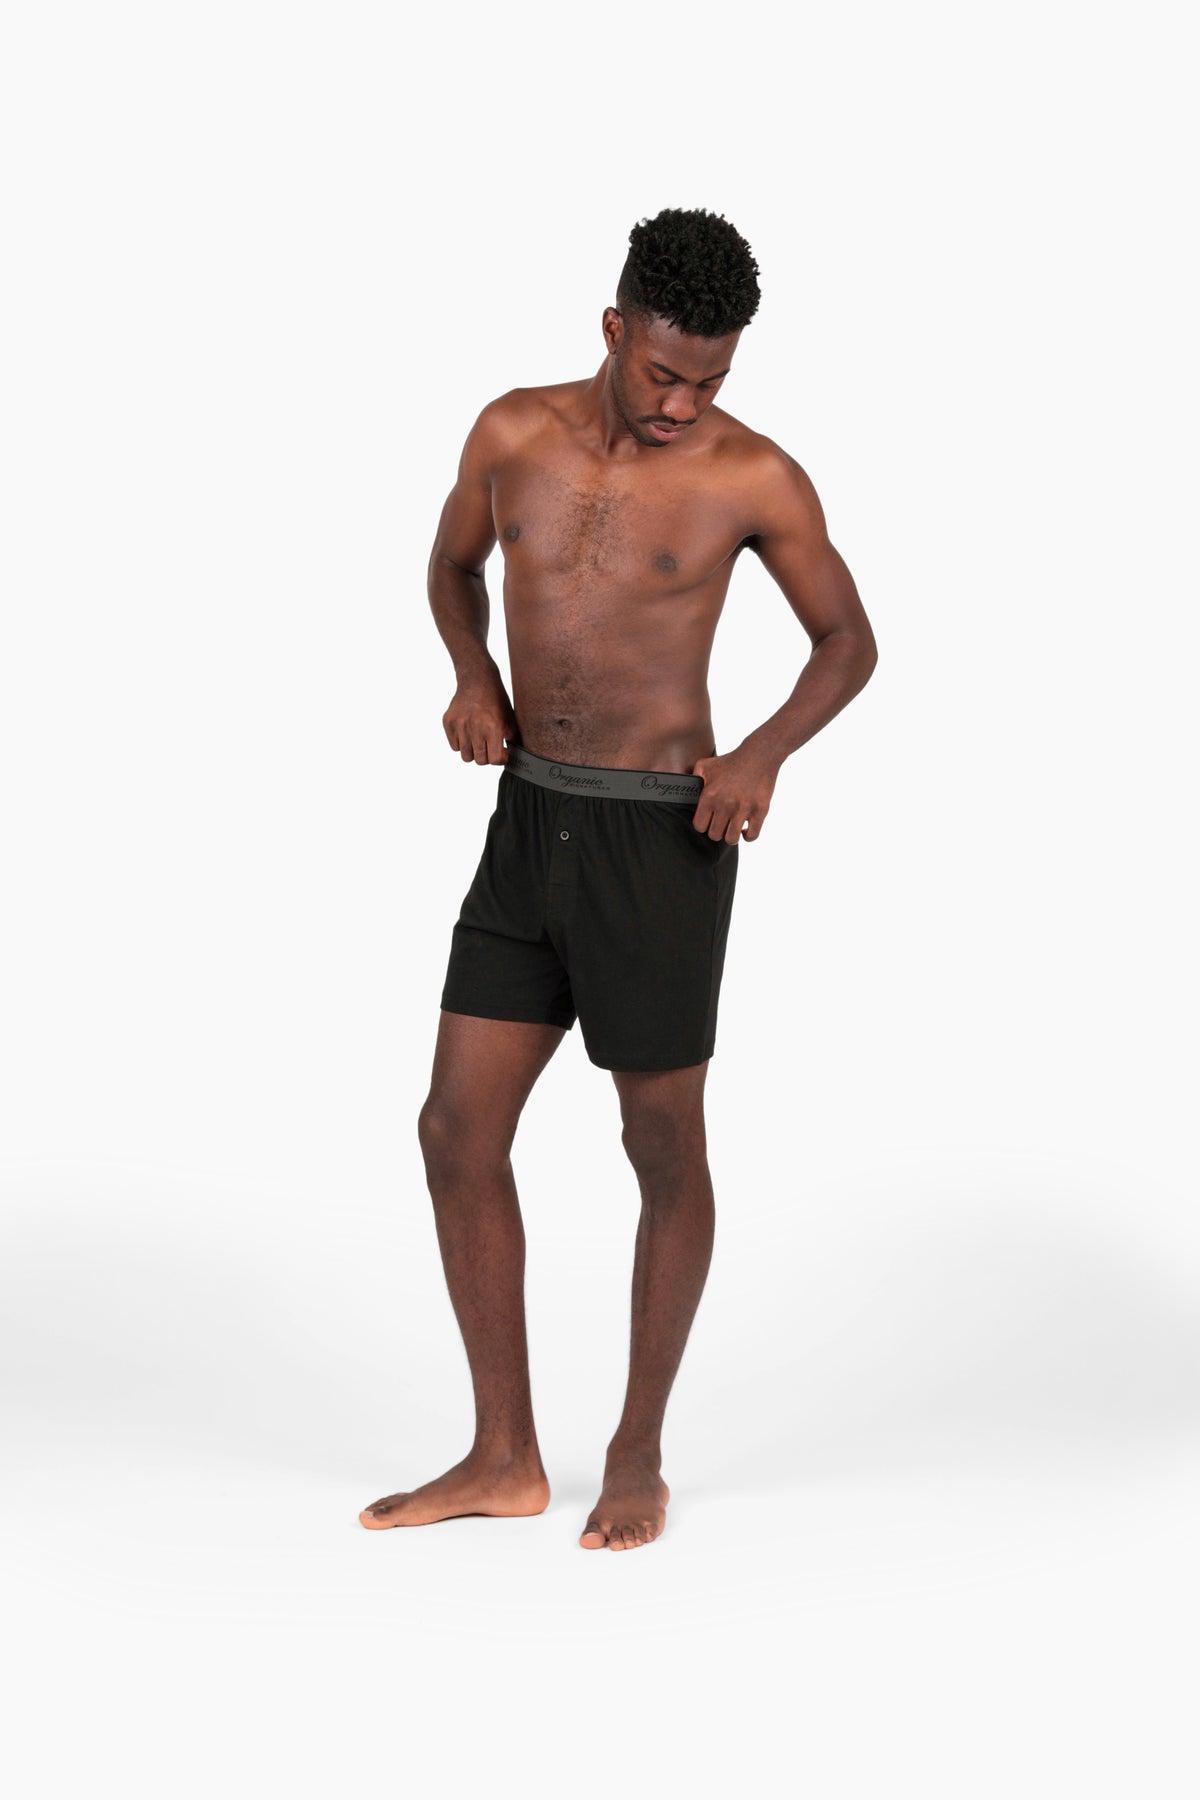 Men's black bamboo underwear 3 pack from Copenhagen Bamboo –